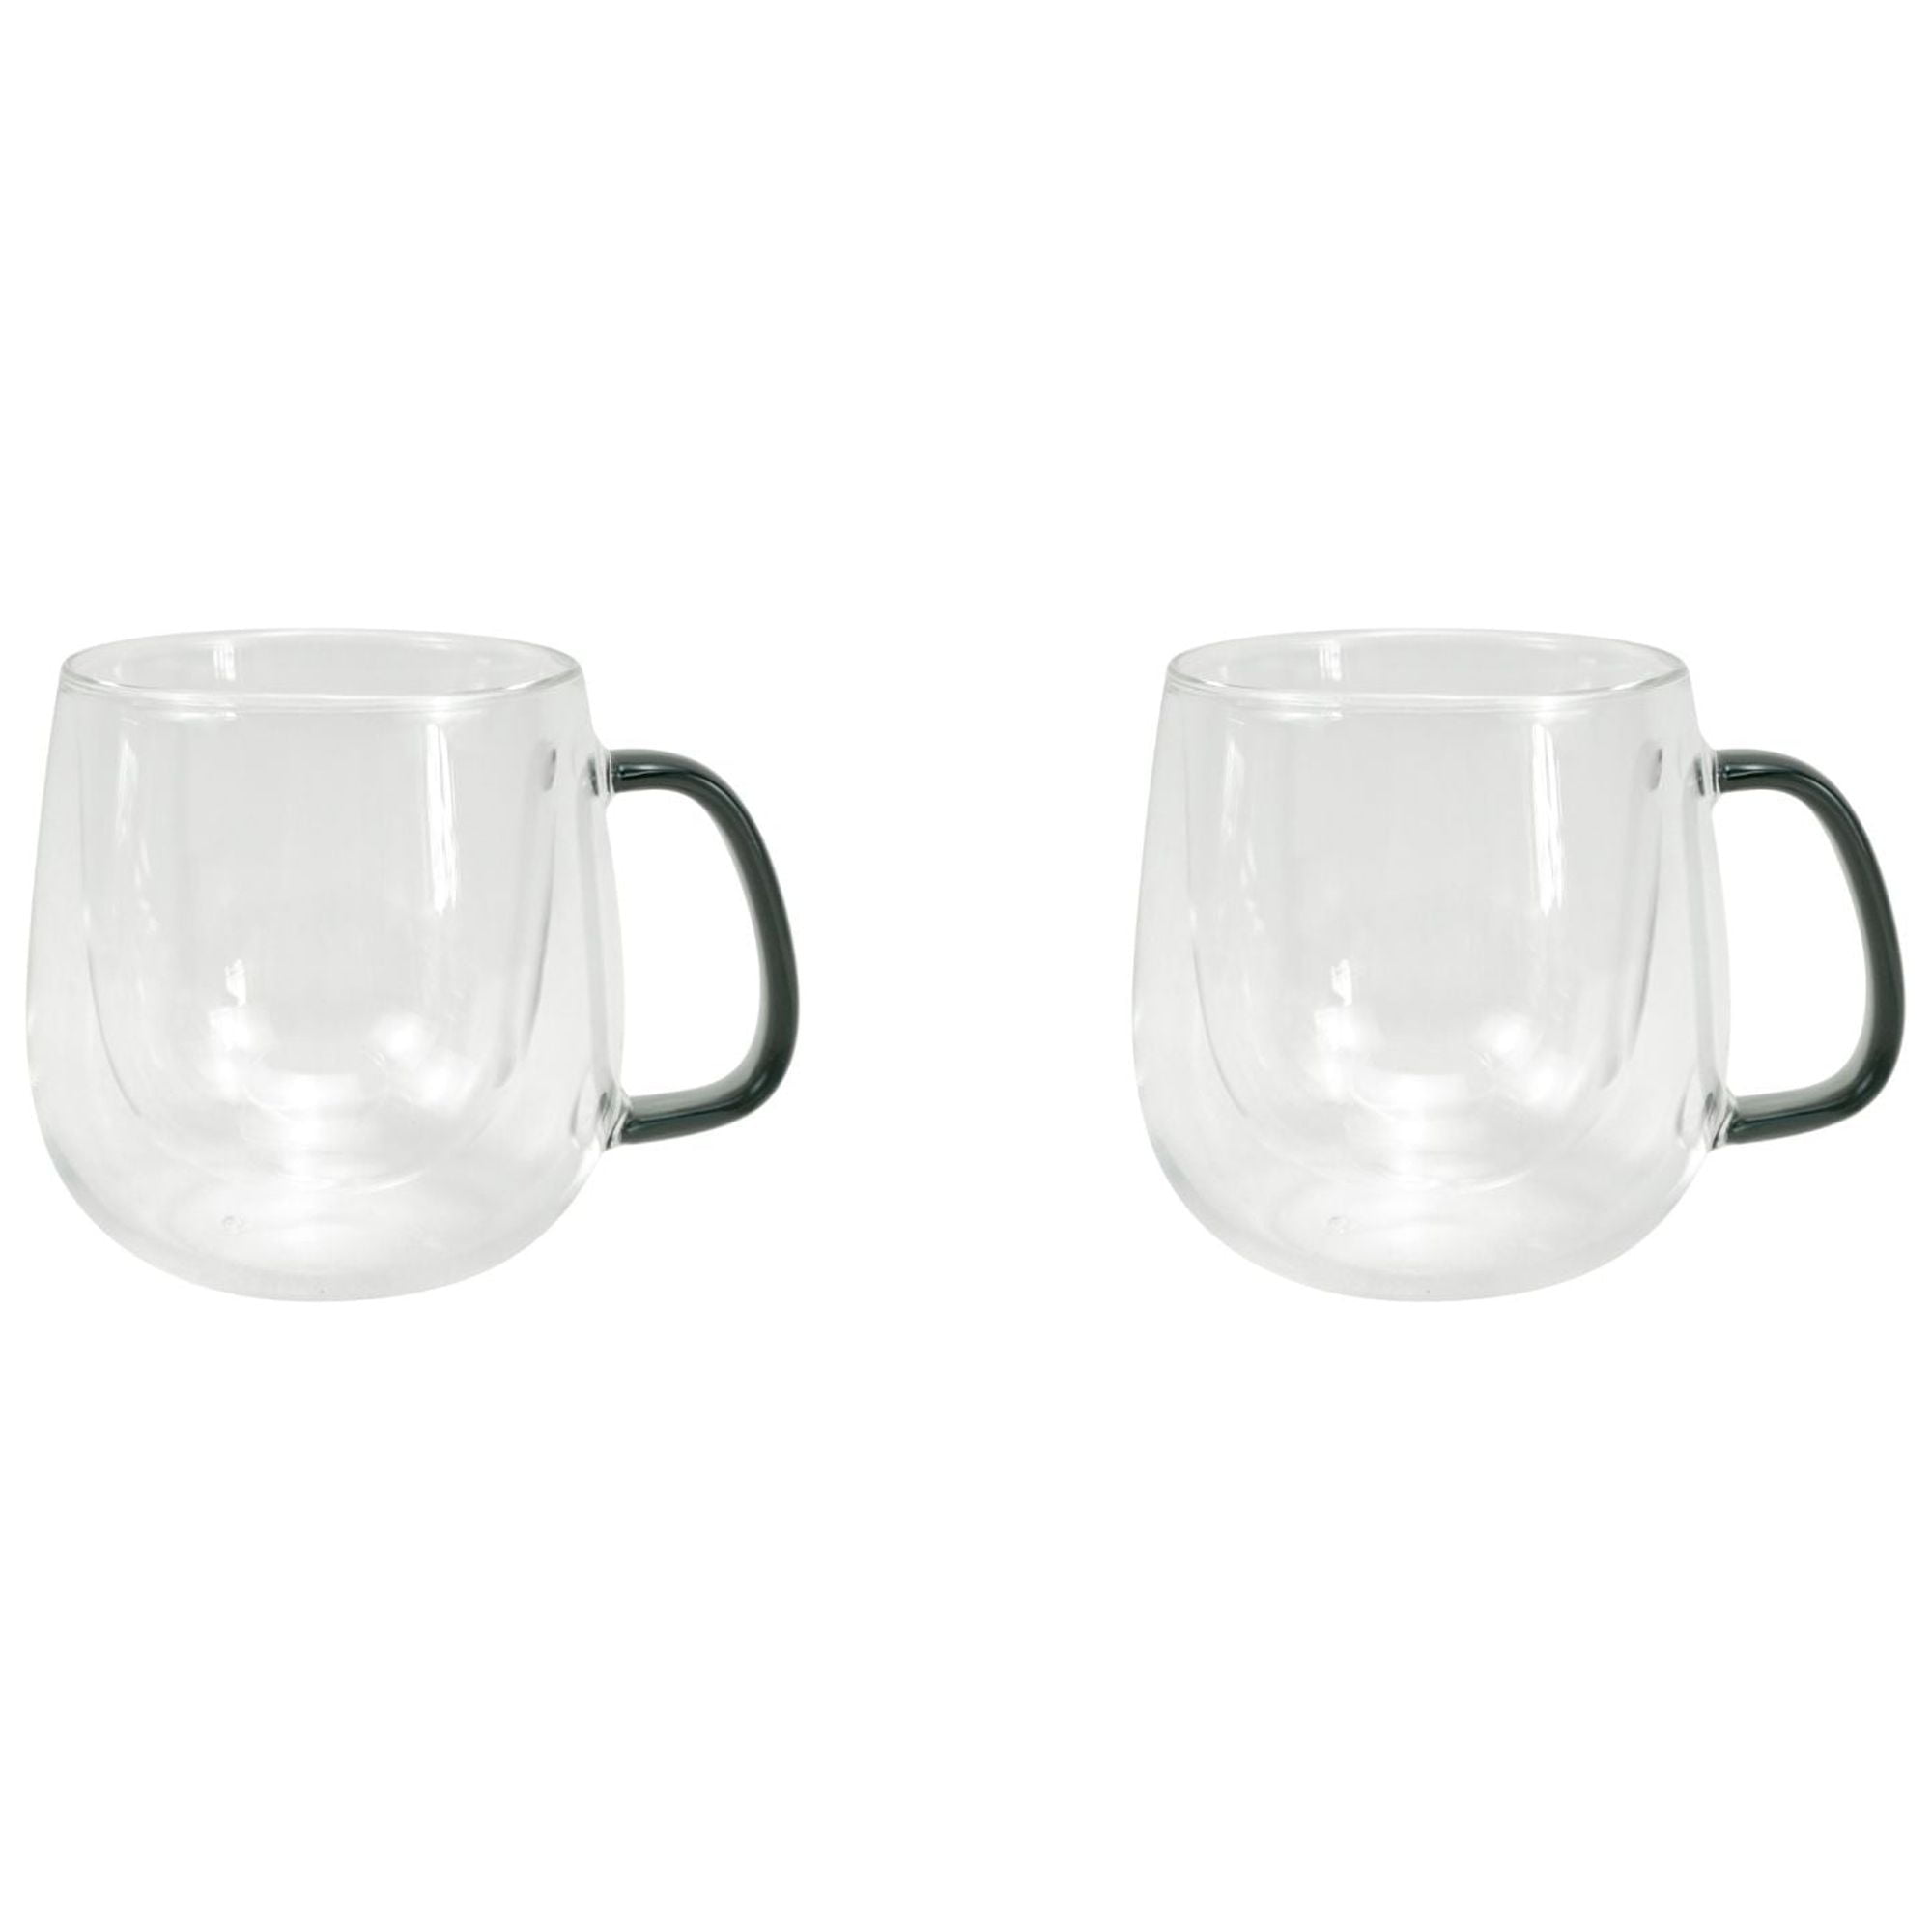 i Kito Double Wall Glass Mug with lid 16 oz, Clear Glass Cups with lids, Glass  cup with handle 